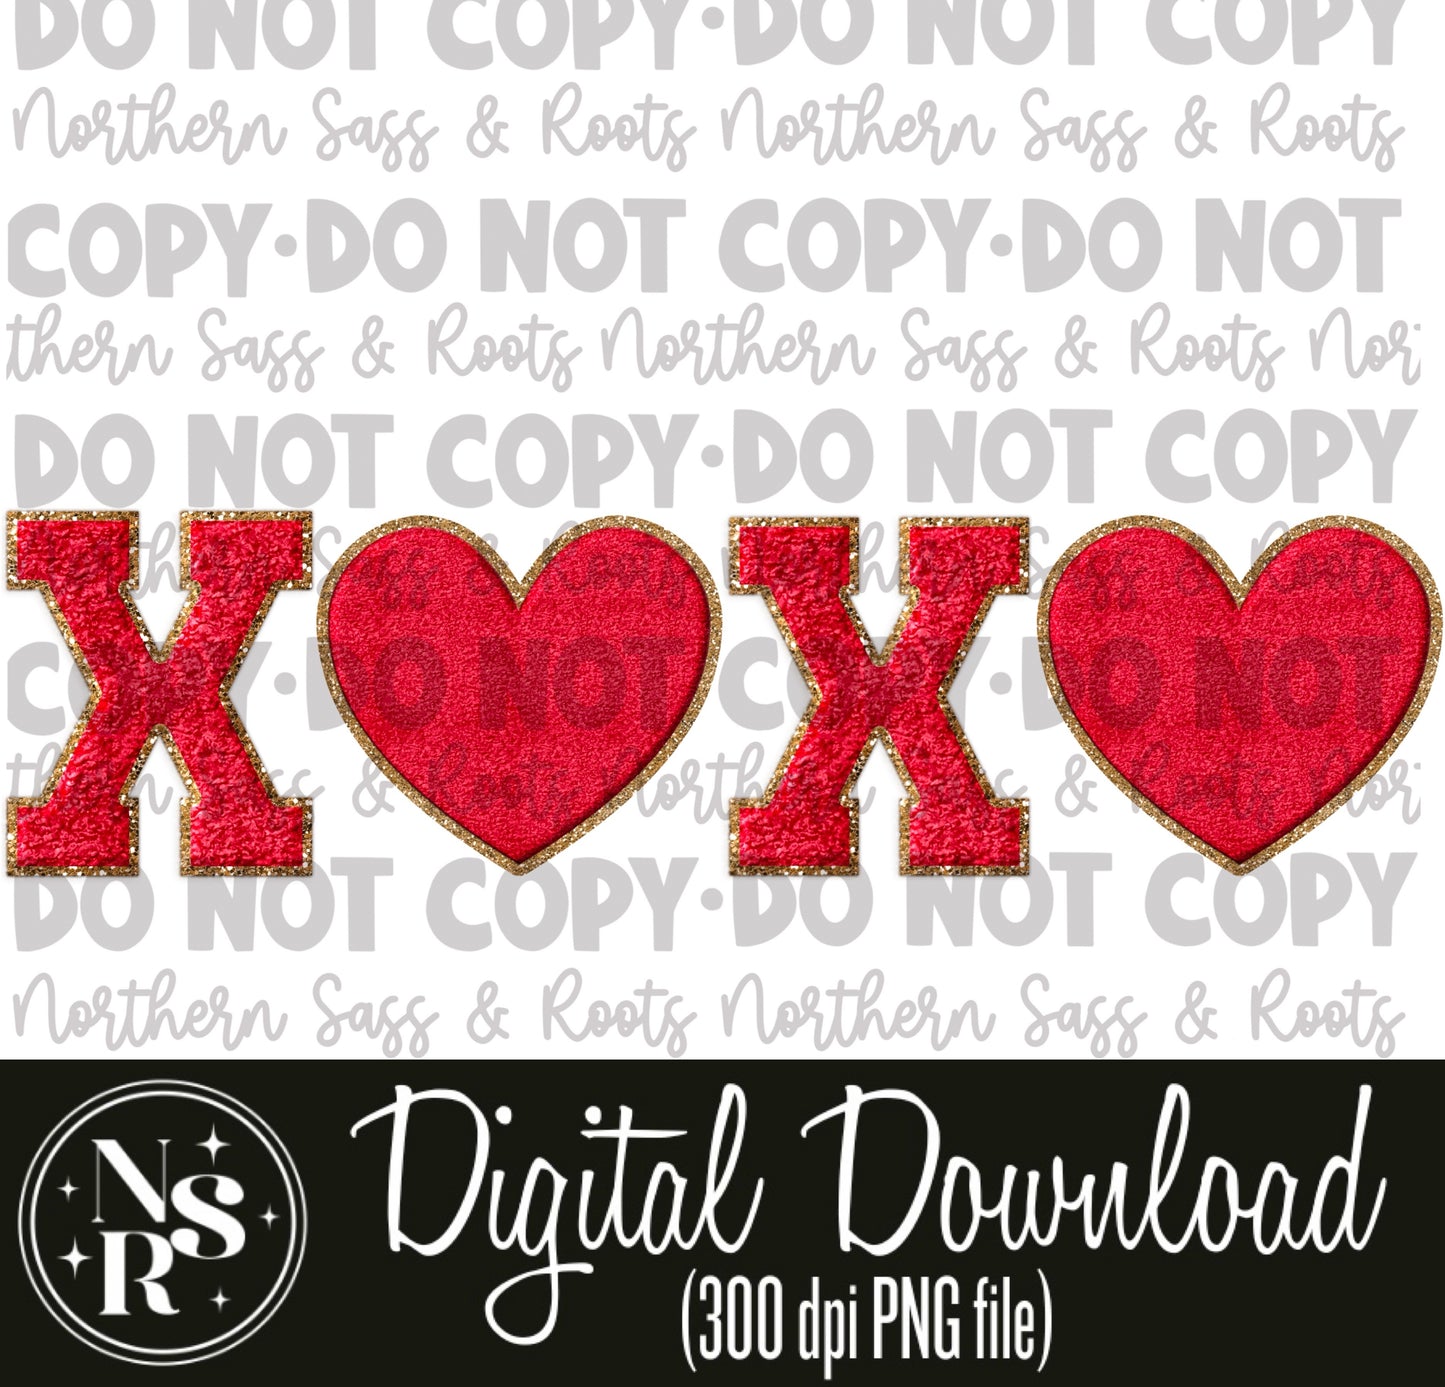 XOXO Chenille (Horizontal): Digital Download